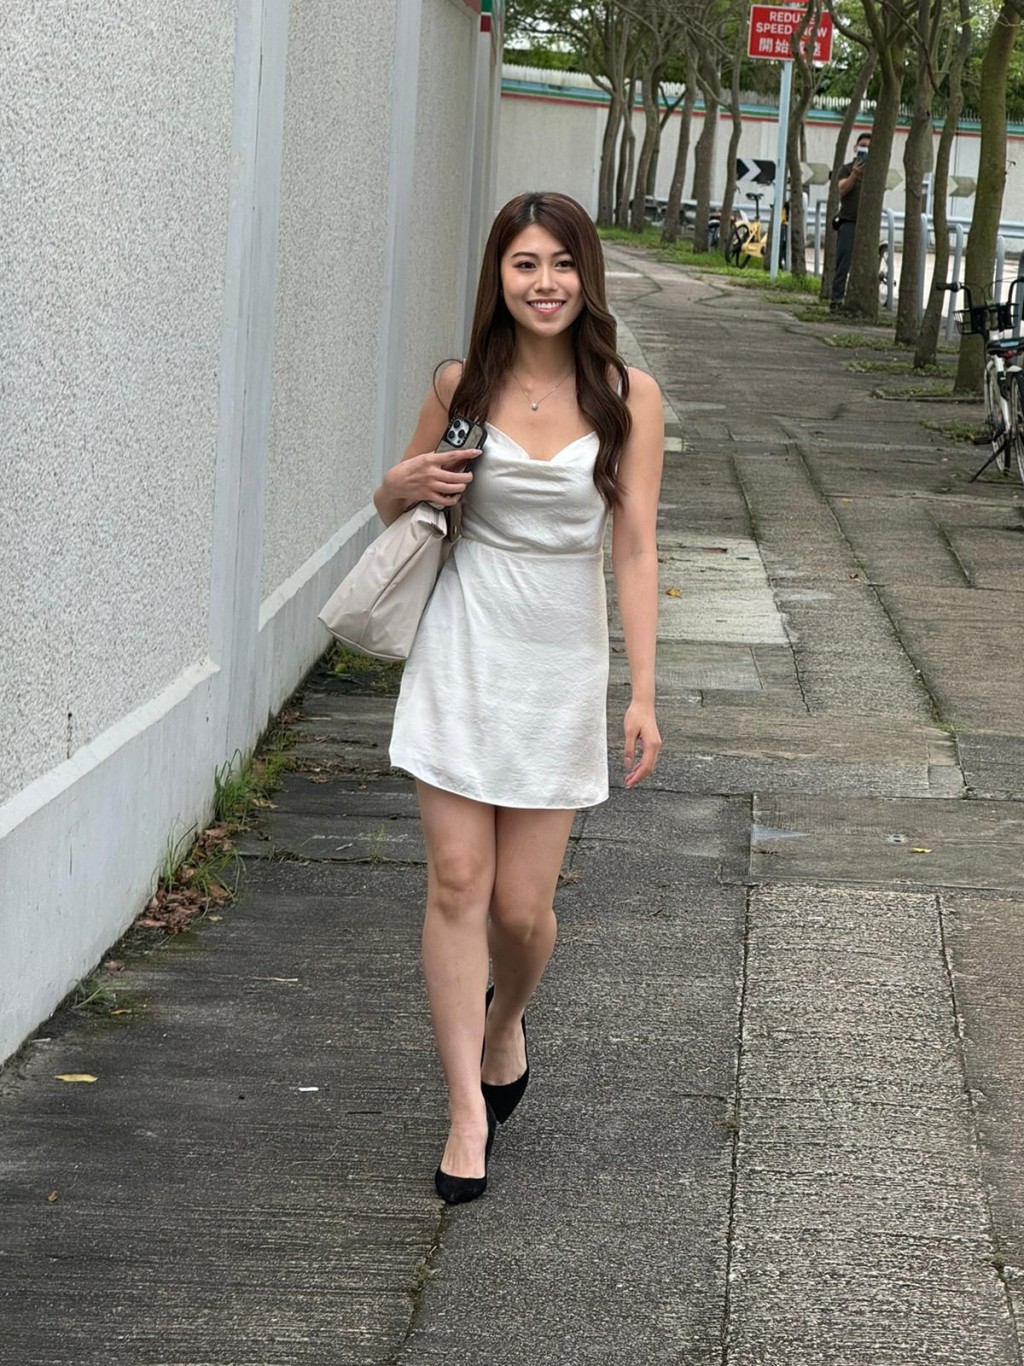 Tracy 24岁，温哥华大学毕业，曾获得温哥华华姐第二名及最上镜小姐，这次不是专程返来讲香港参选，而是想在香港发展